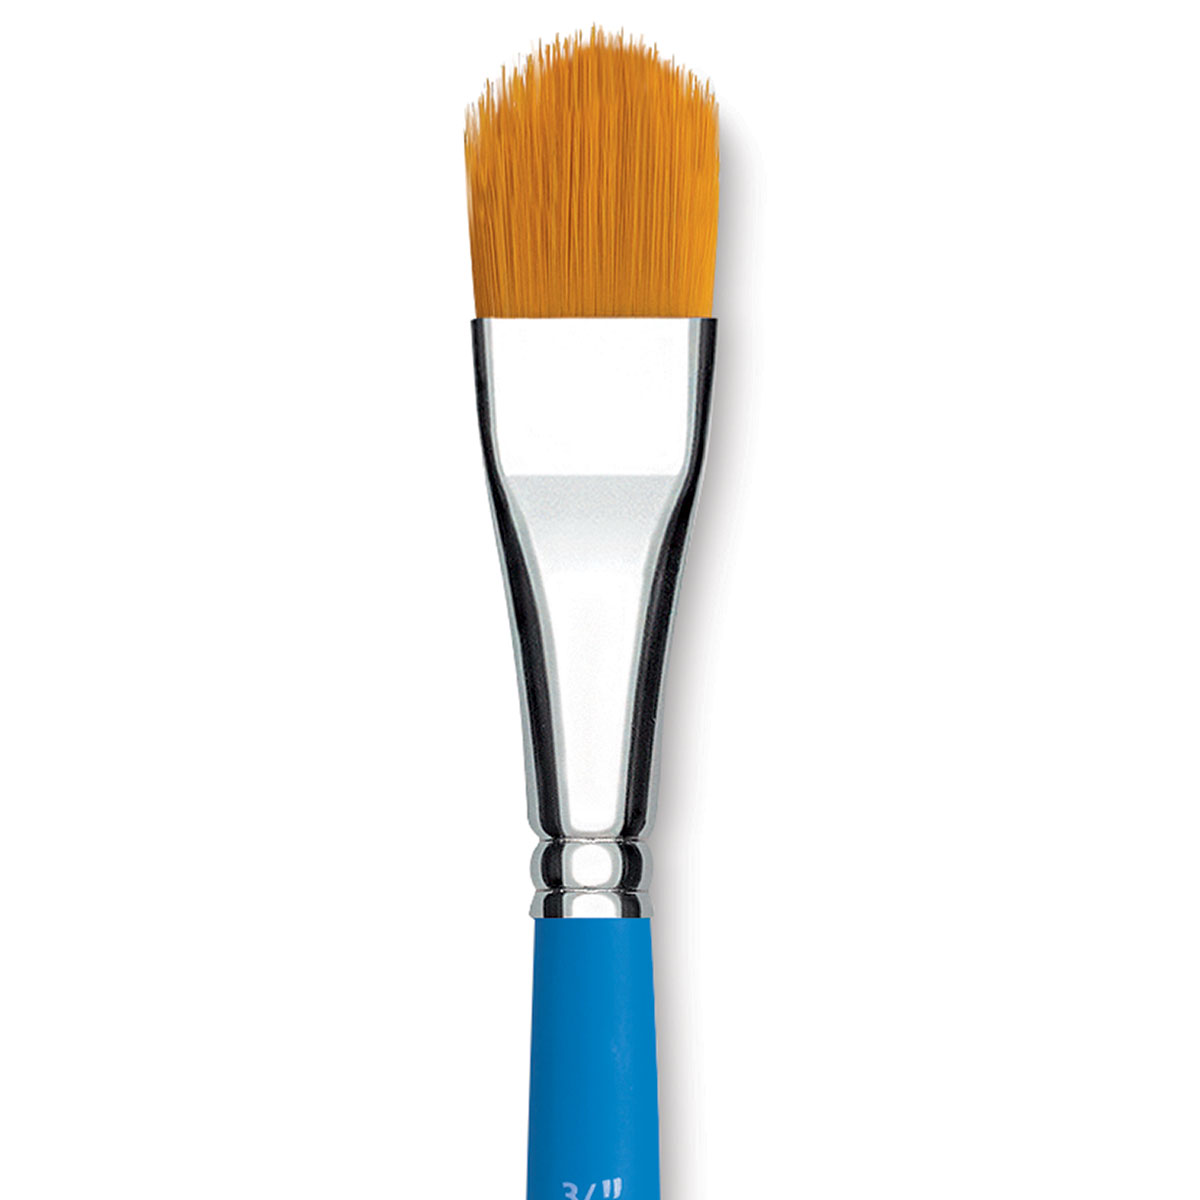  Princeton Select Artiste, Series 3750, Paint Brush